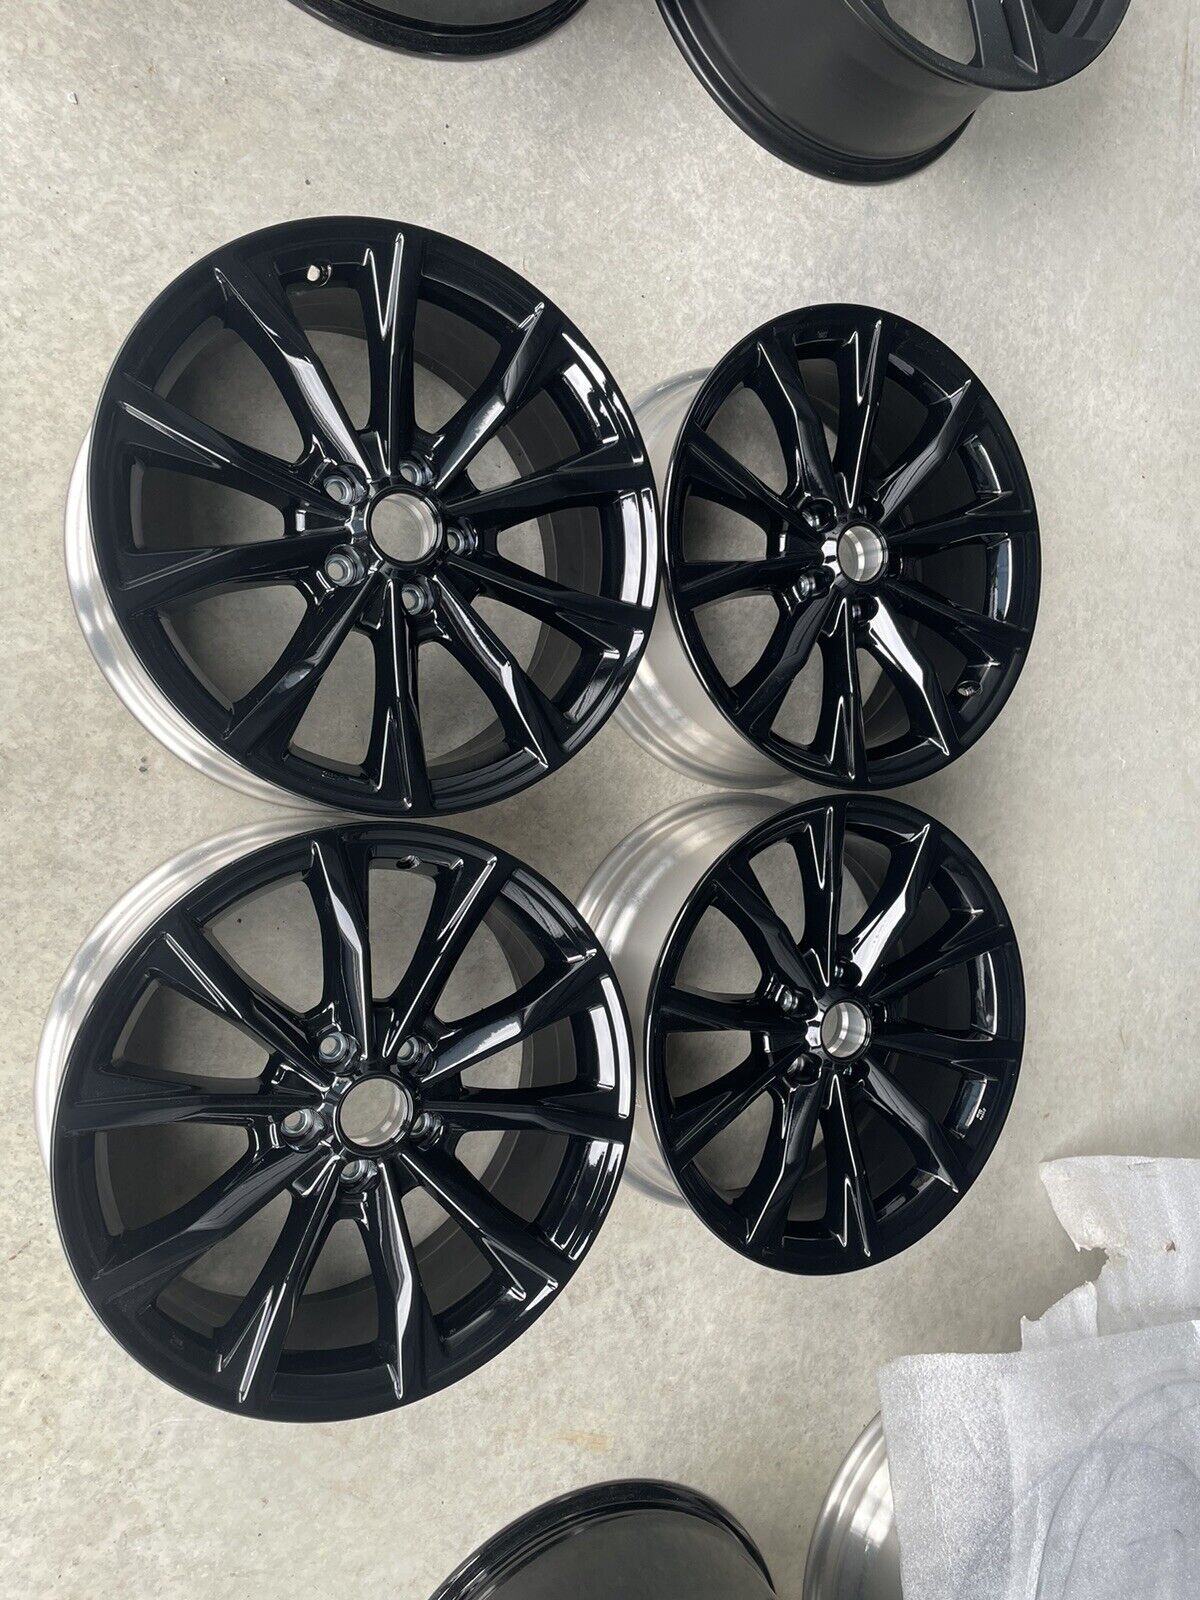 Honda Gloss Black Wheels Rims 18” Inch Factory Oem CRV,Civic,Accord Set 4 60310B